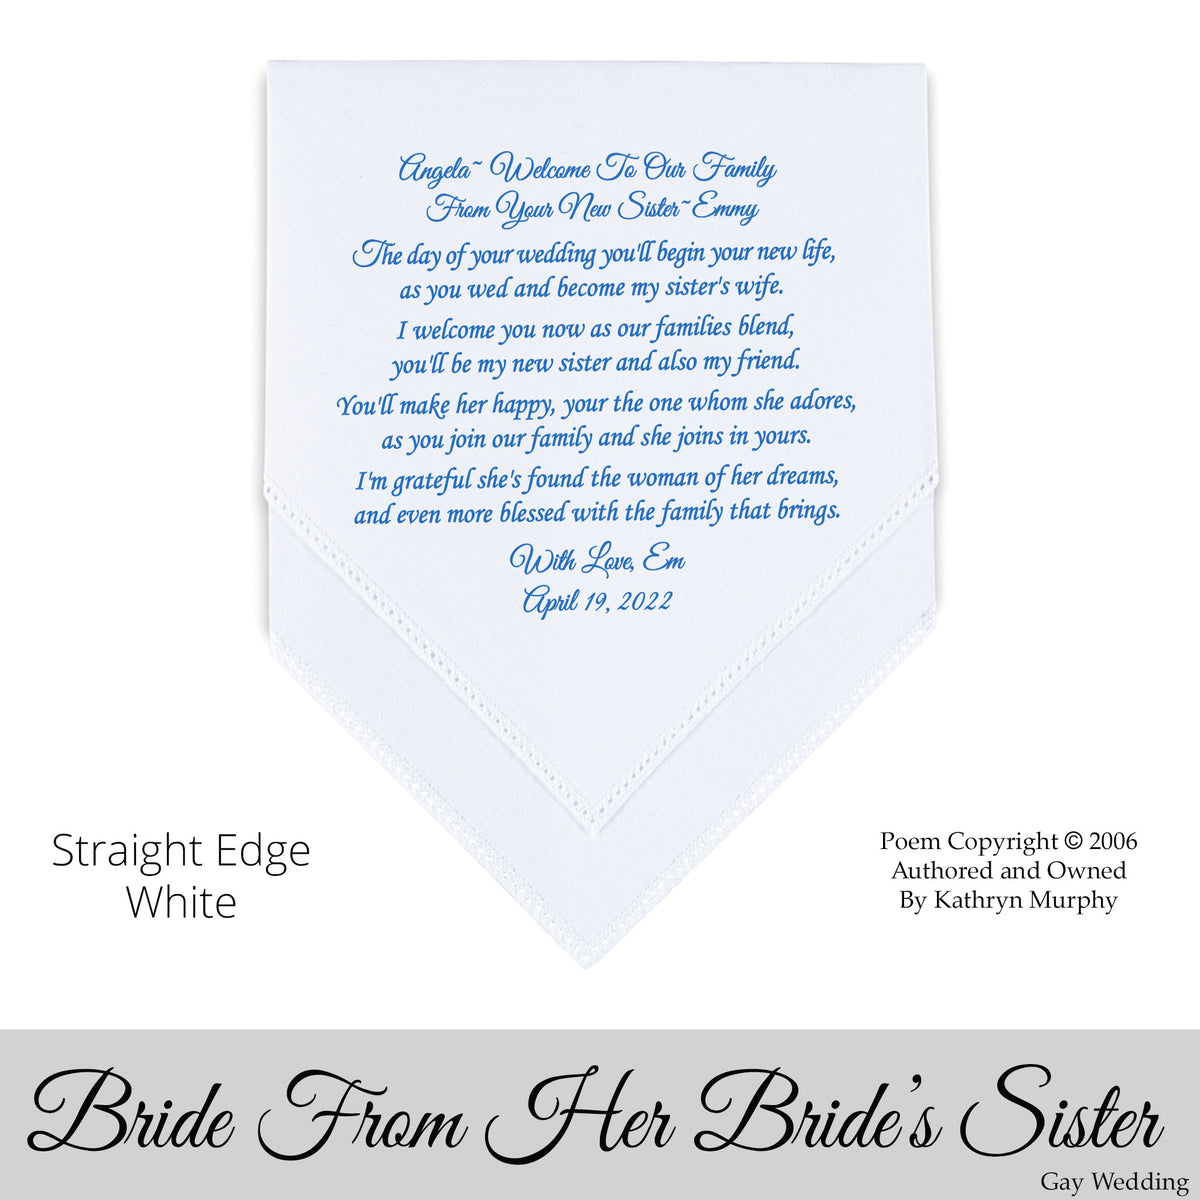 Gay Wedding Gift for the bride poem printed wedding hankie